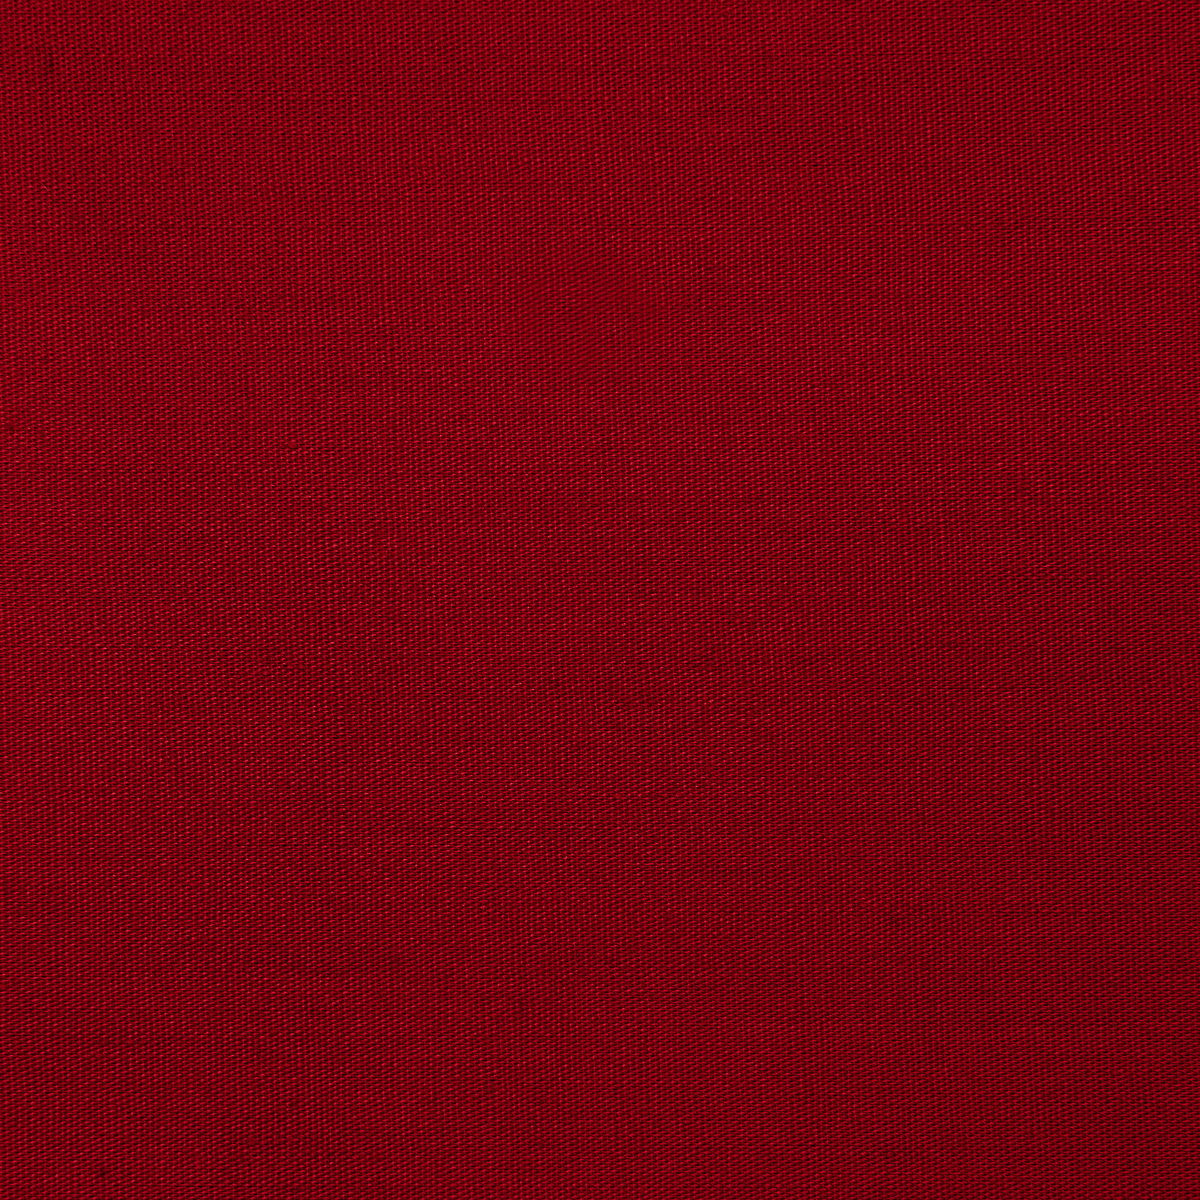 Biertischhusse bodenlang Polyester-Bordeaux Rot / 200x50 cm